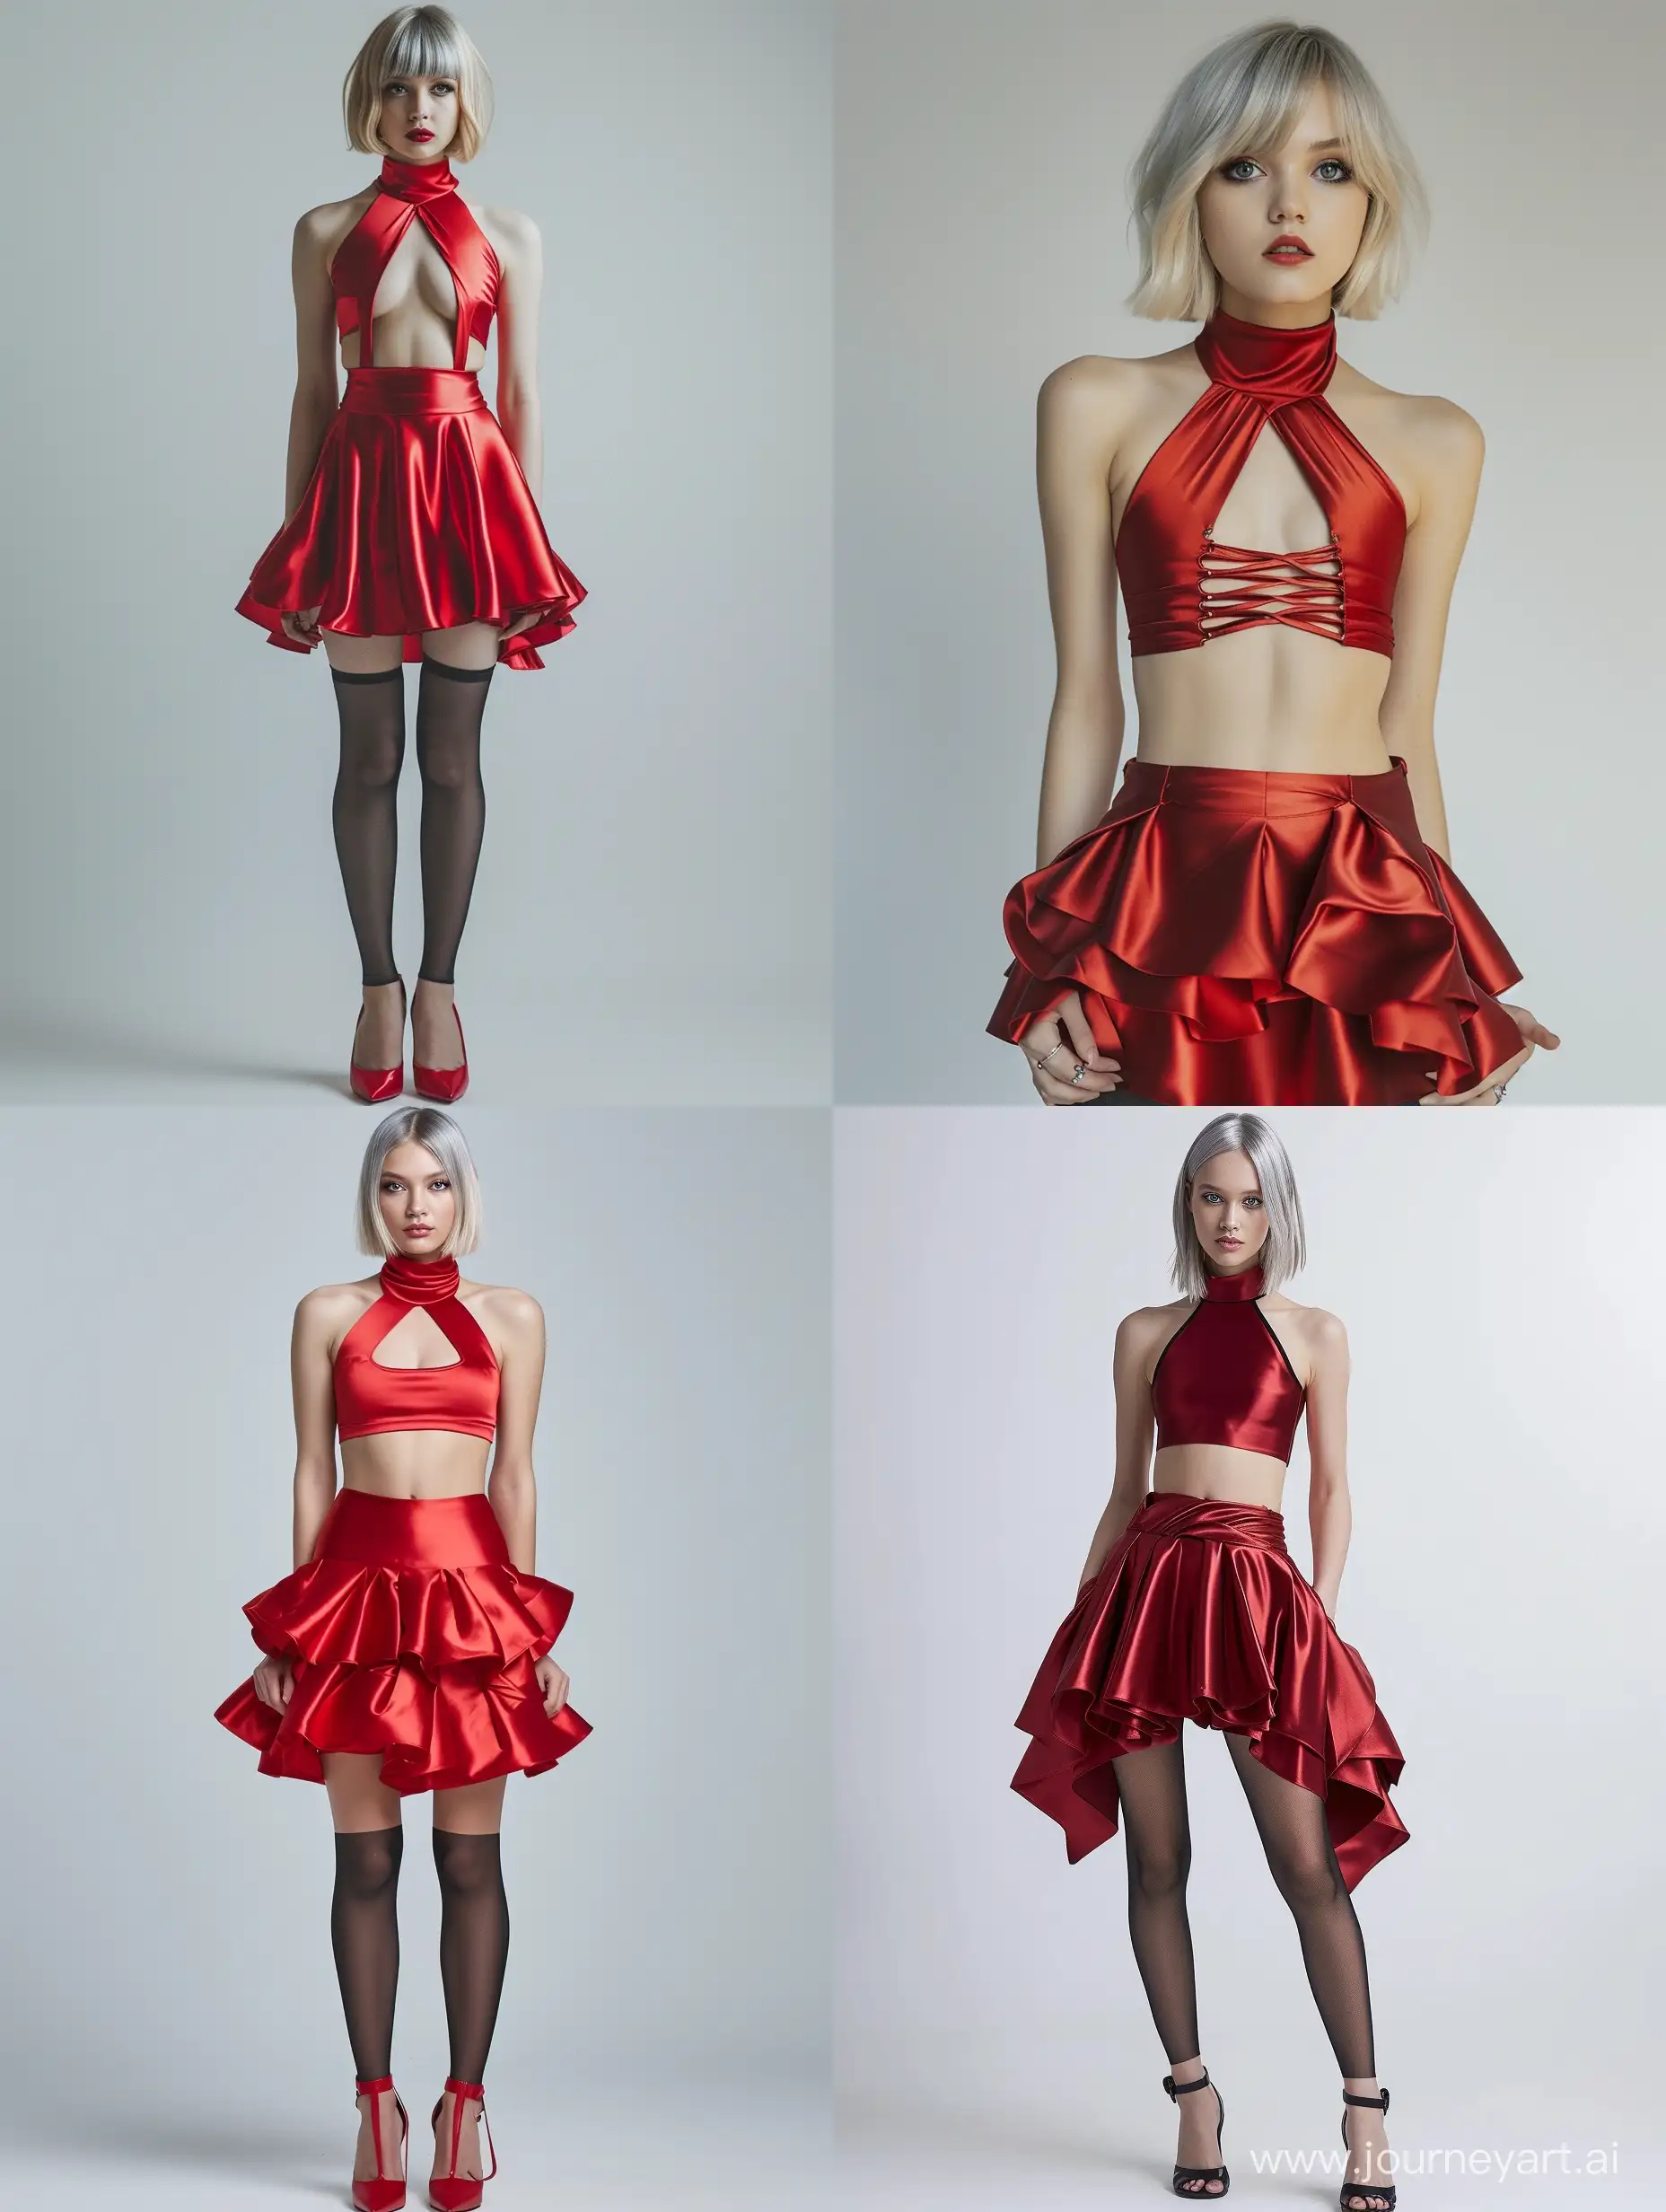 Fashionforward-Blonde-Woman-in-Red-Satin-Ensemble-and-Stilettos